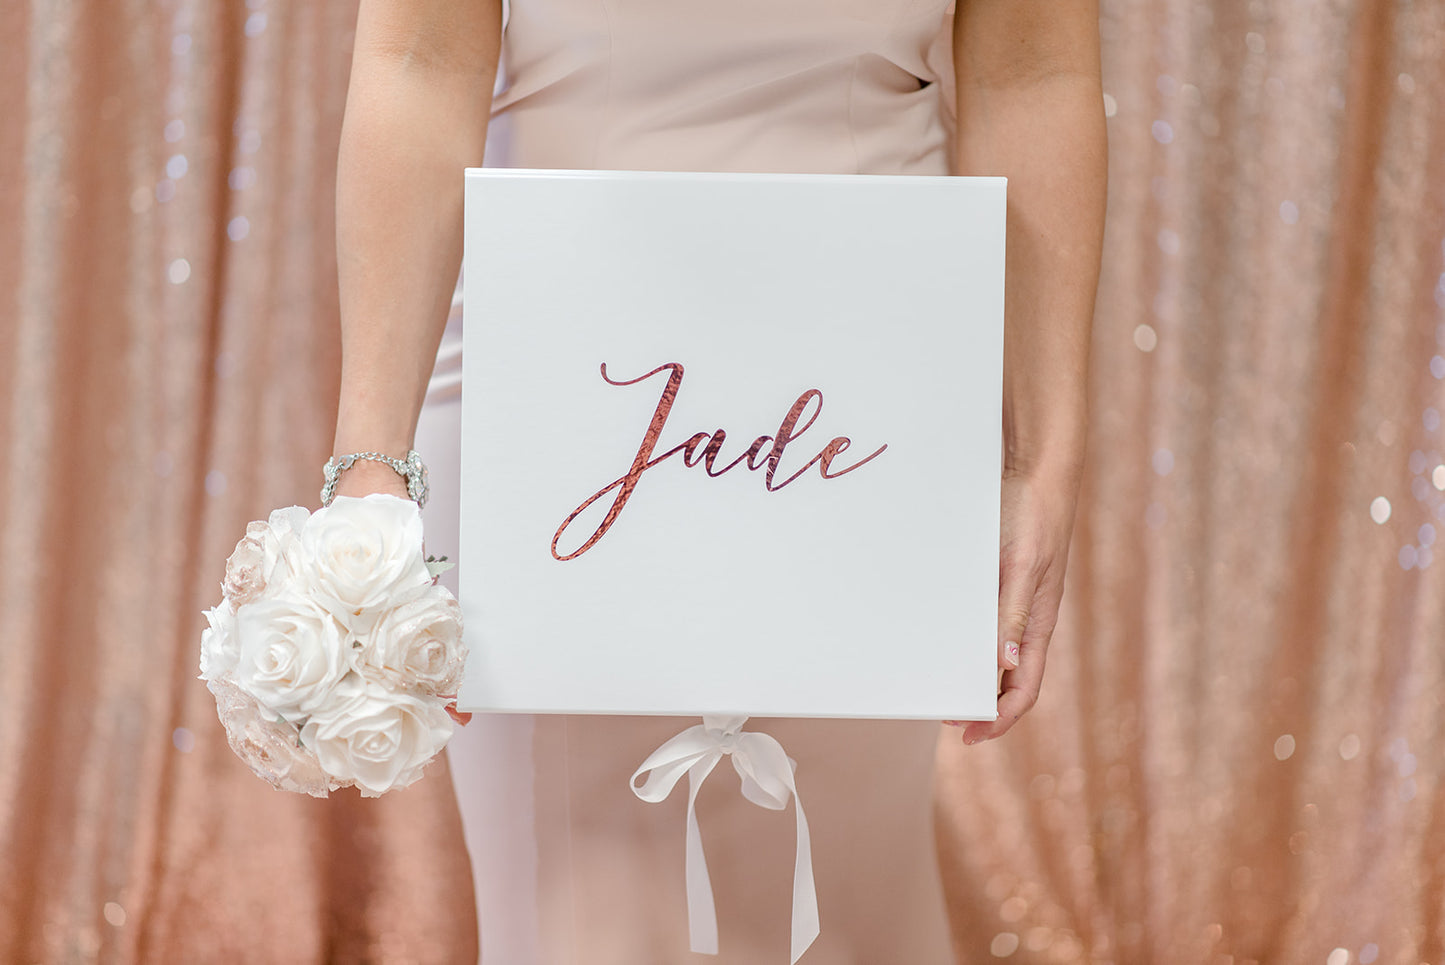 Personalised gift box, large white gift box with ribbon, bridesmaid gift box